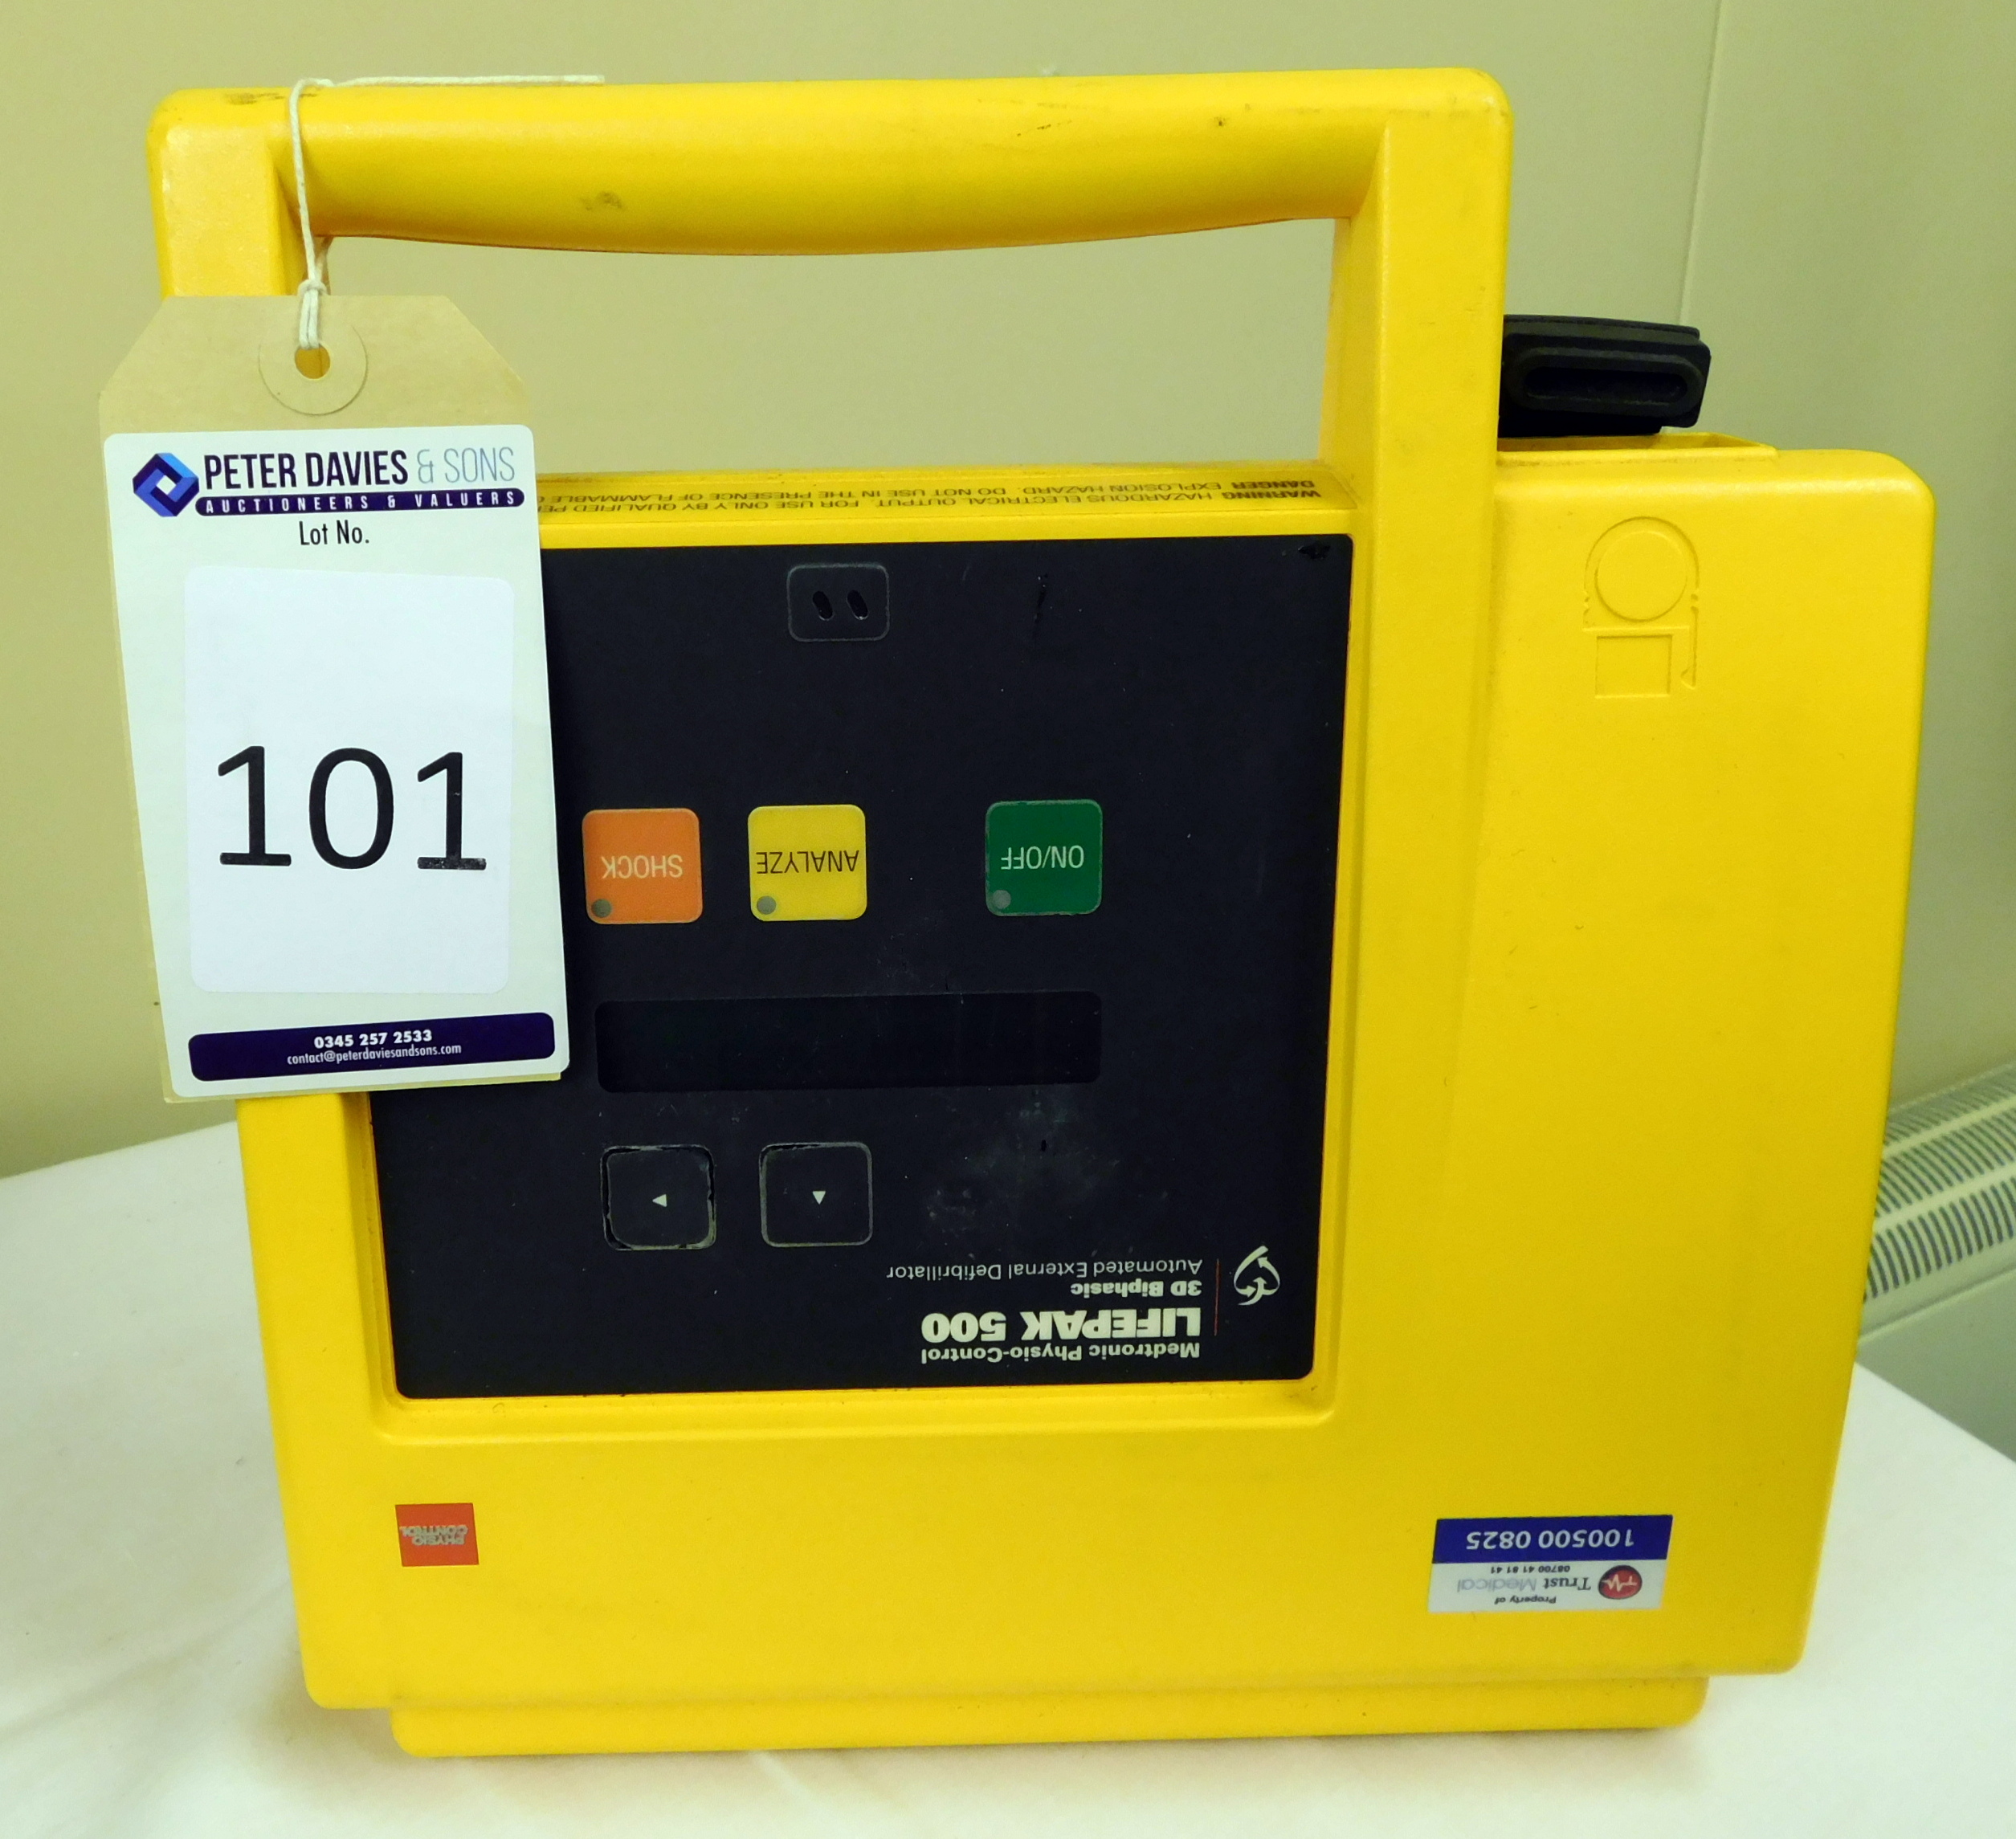 Medtronic Lifepak 500 Defibrillator, Serial Number: 11795408, Asset Number: 1005000825